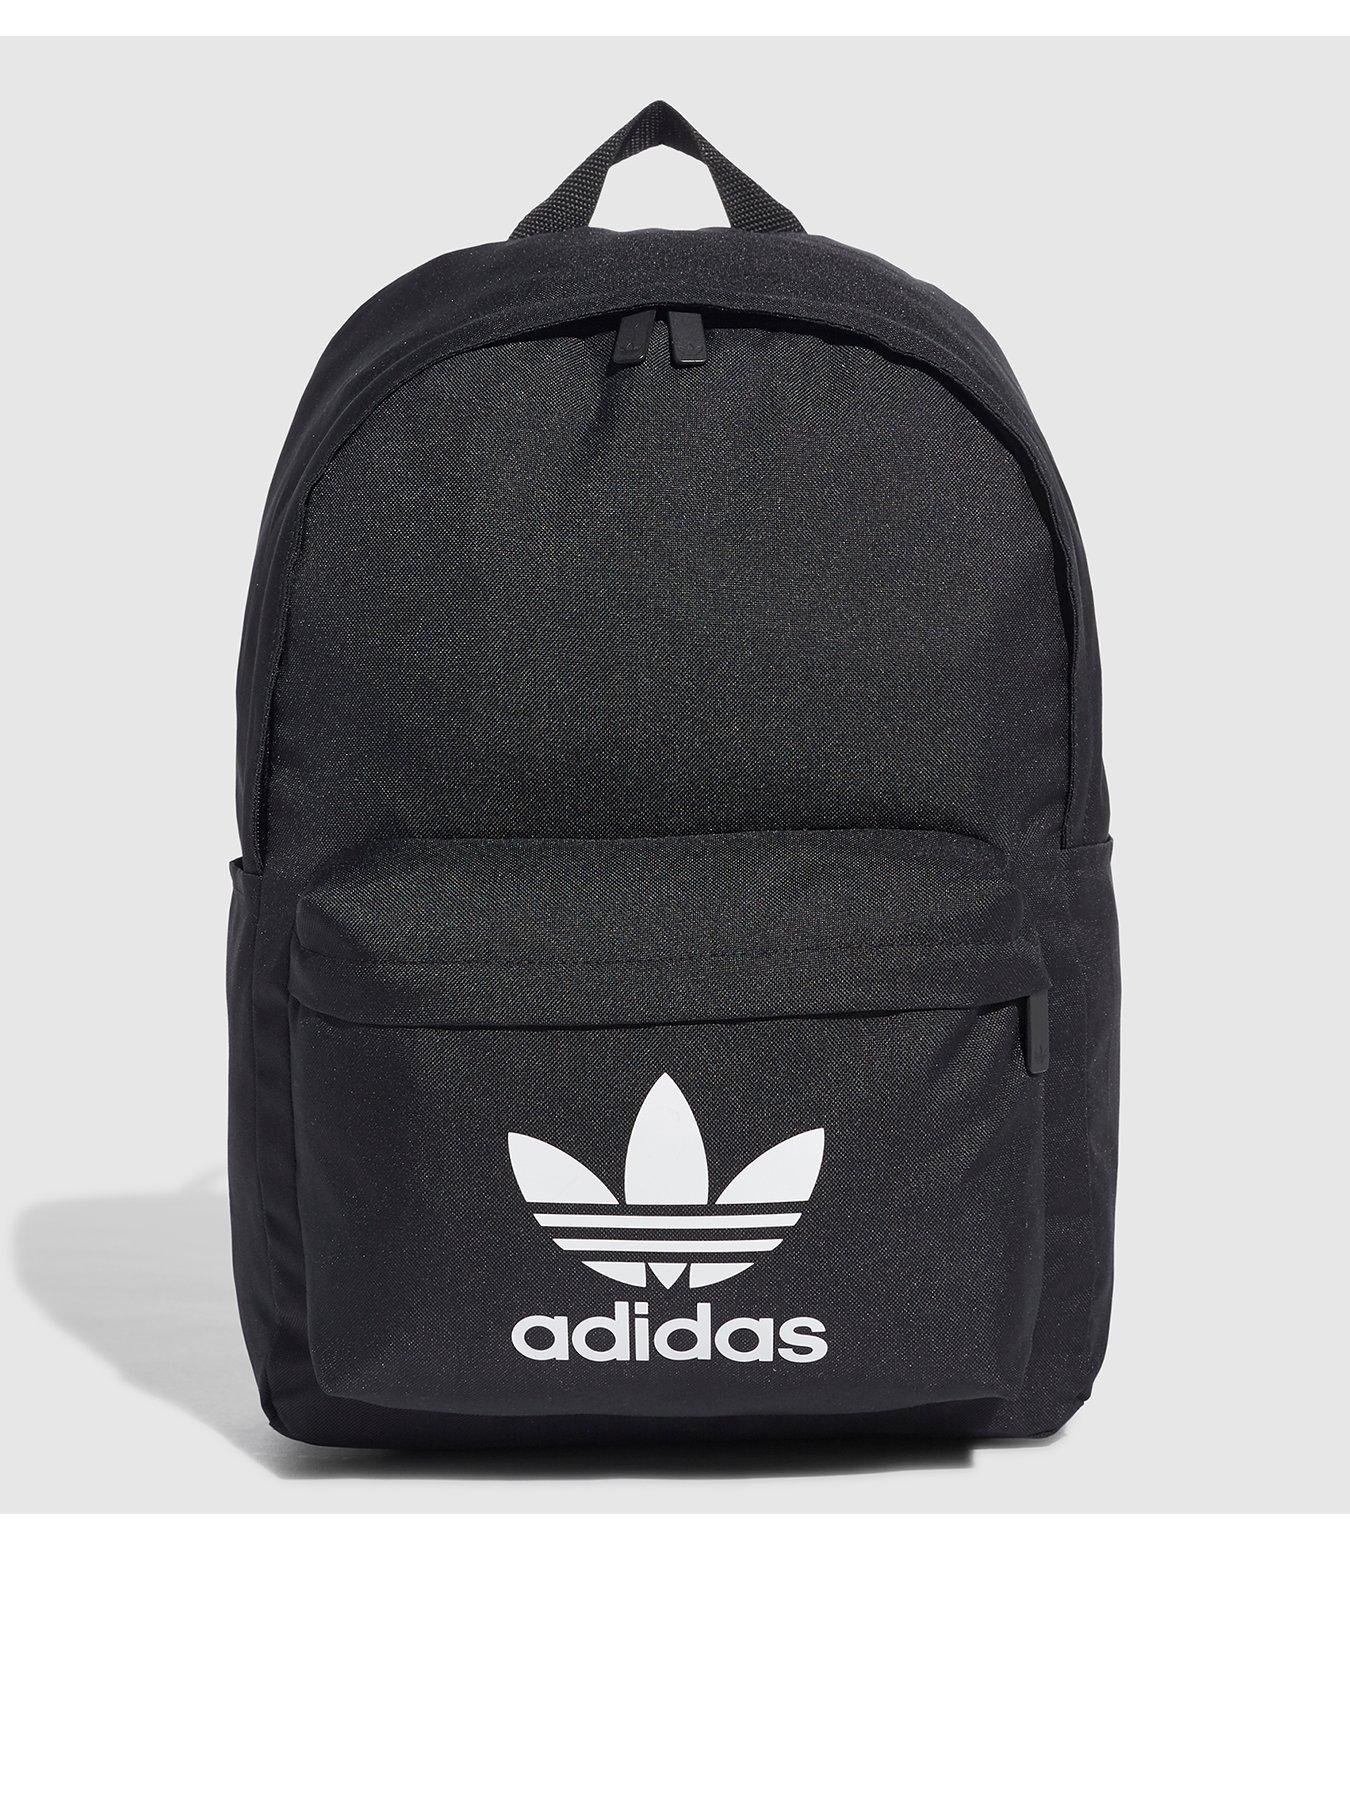 adidas backpacks cheap